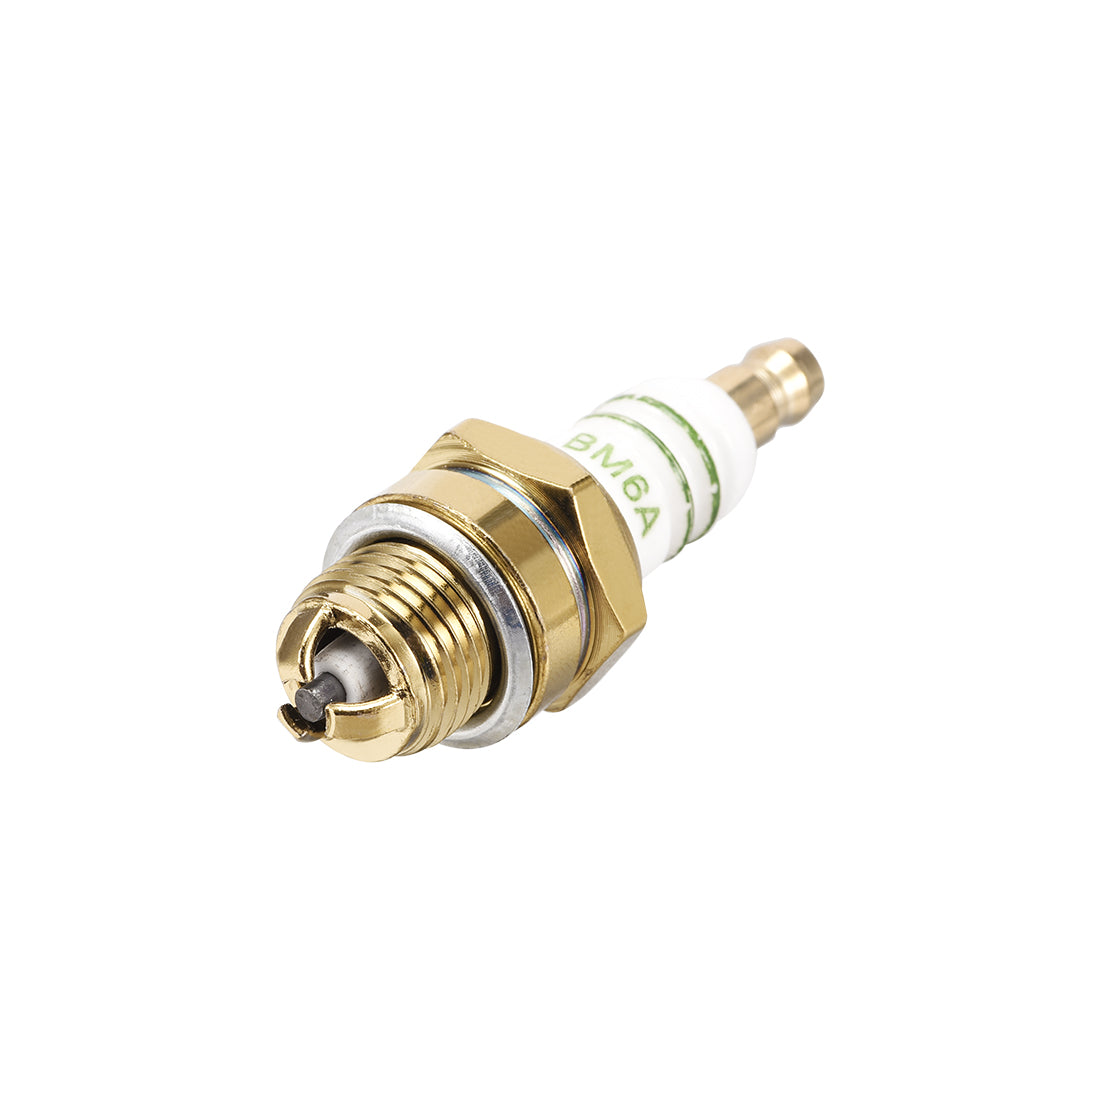 uxcell Uxcell BM6A Spark Plug 3 Electrode for M7 / L7T / CJ8 / 1560 Spark Plugs Replacement , 5pcs